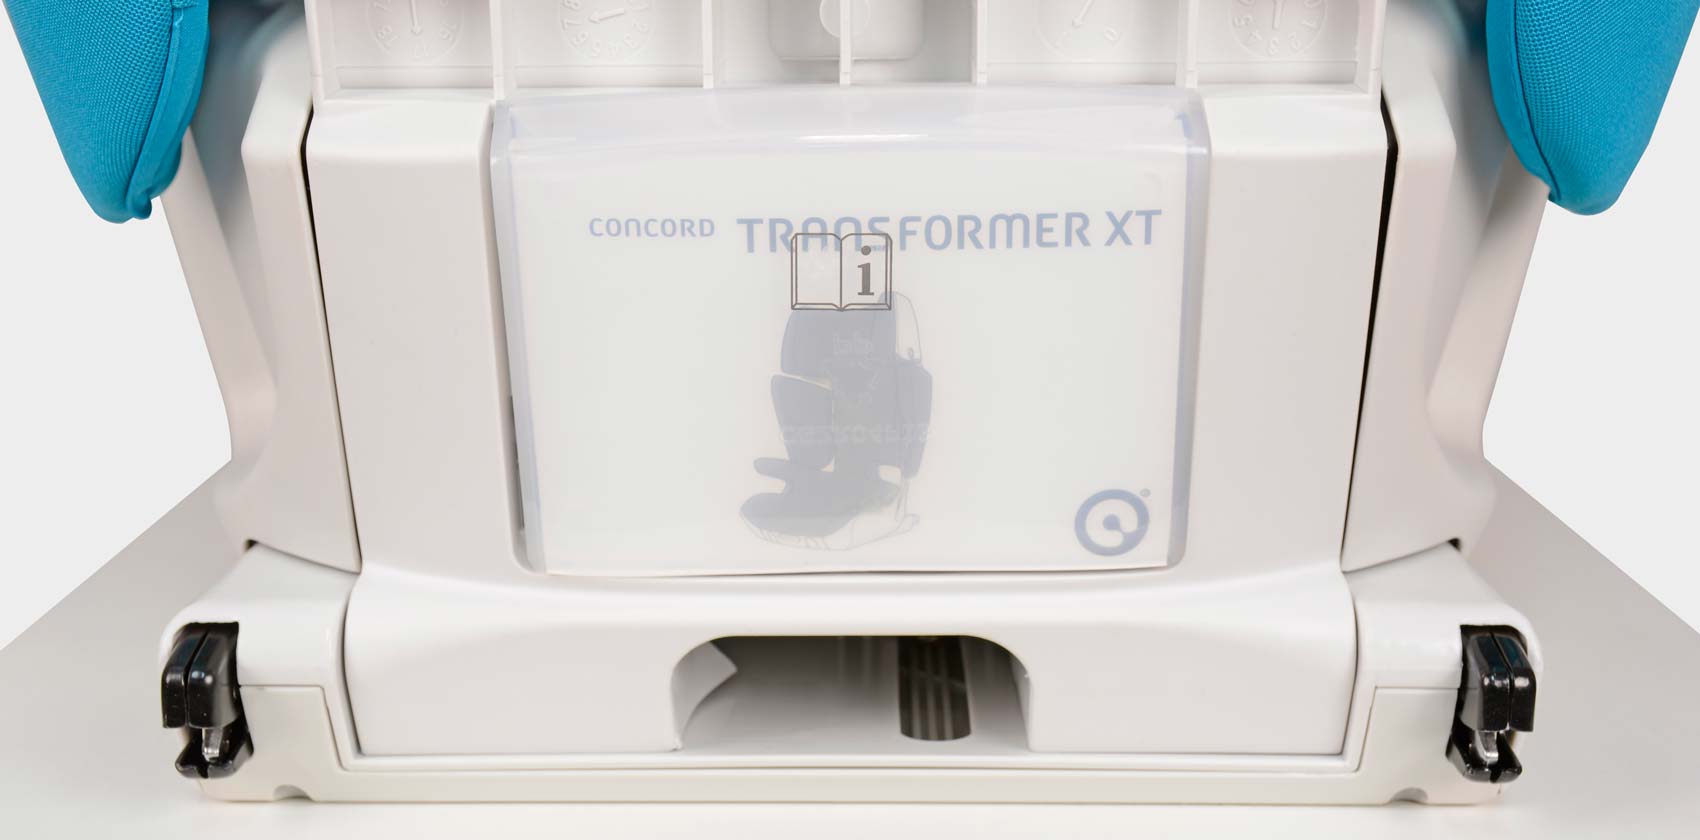 Concord Transformer XT отсек для инструкции